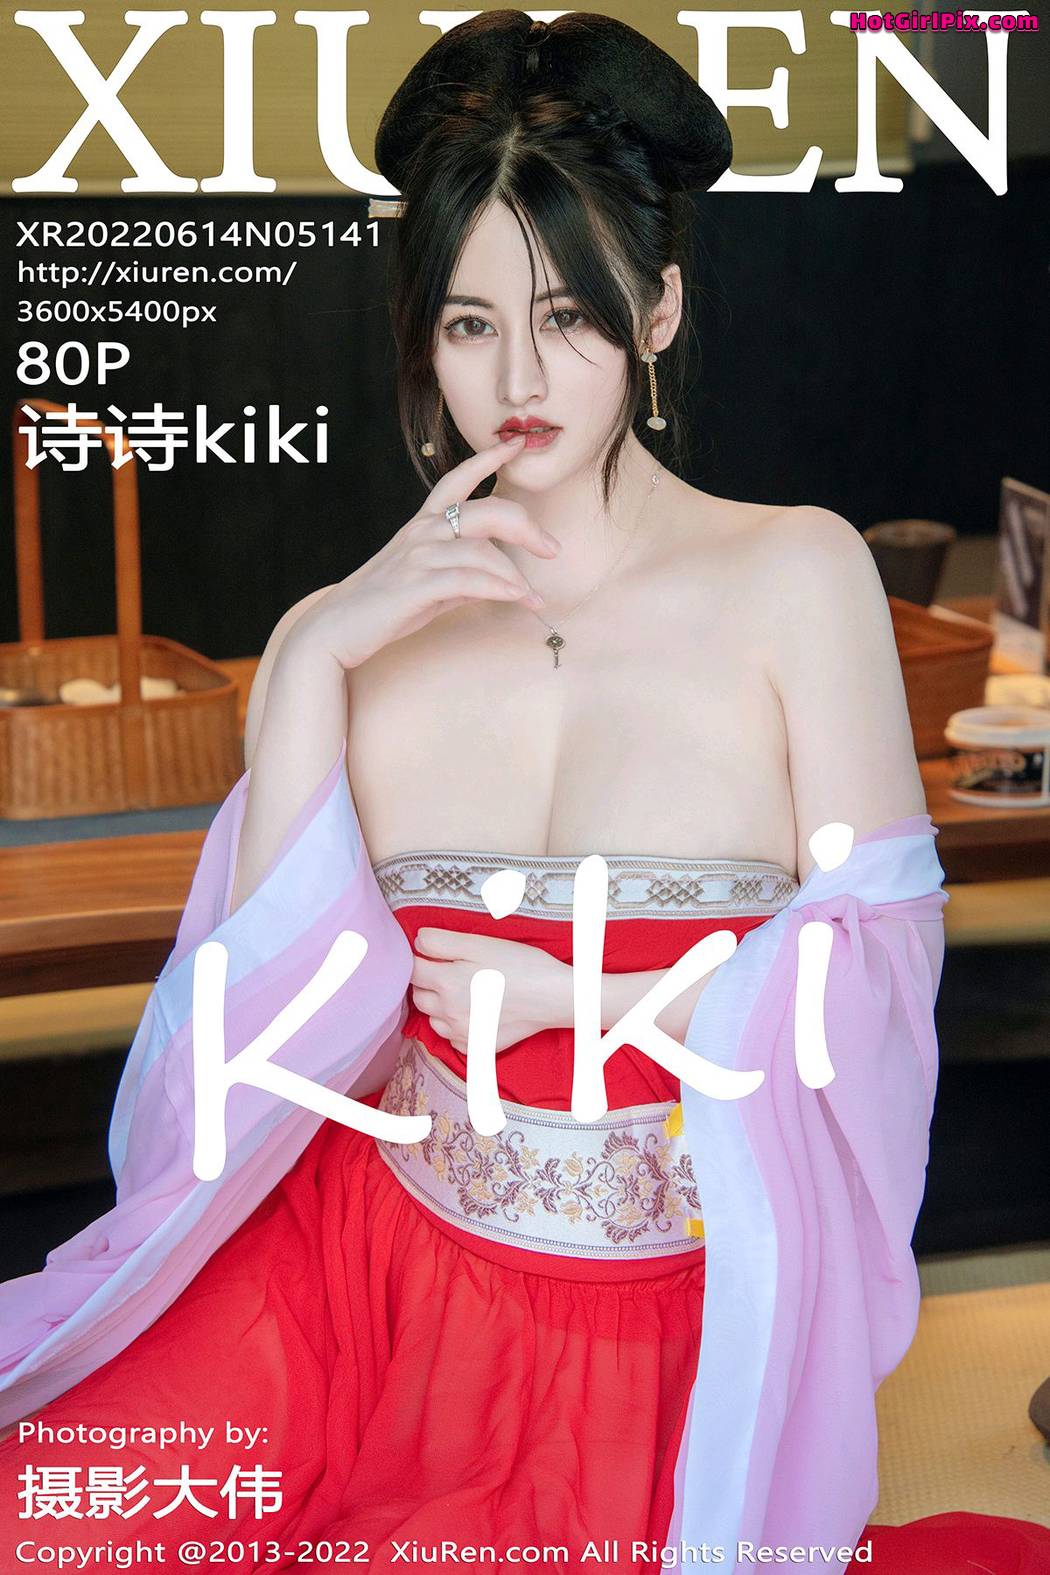 [XIUREN] No.5141 诗诗kiki Cover Photo